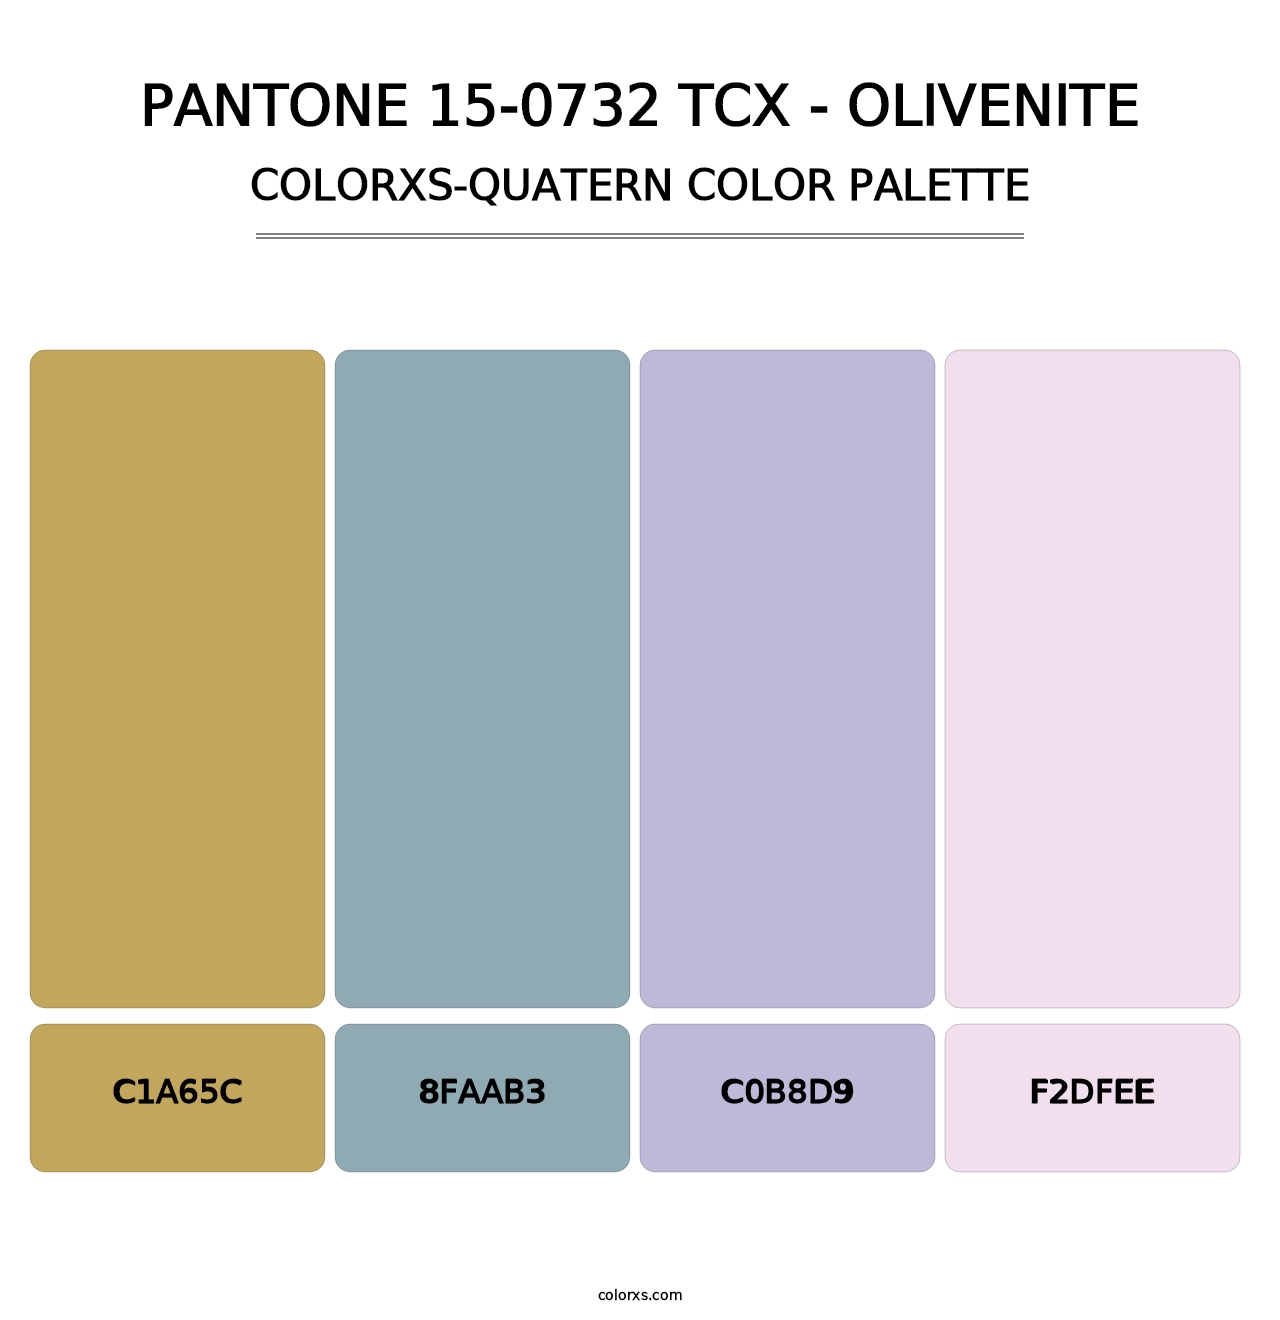 PANTONE 15-0732 TCX - Olivenite - Colorxs Quatern Palette